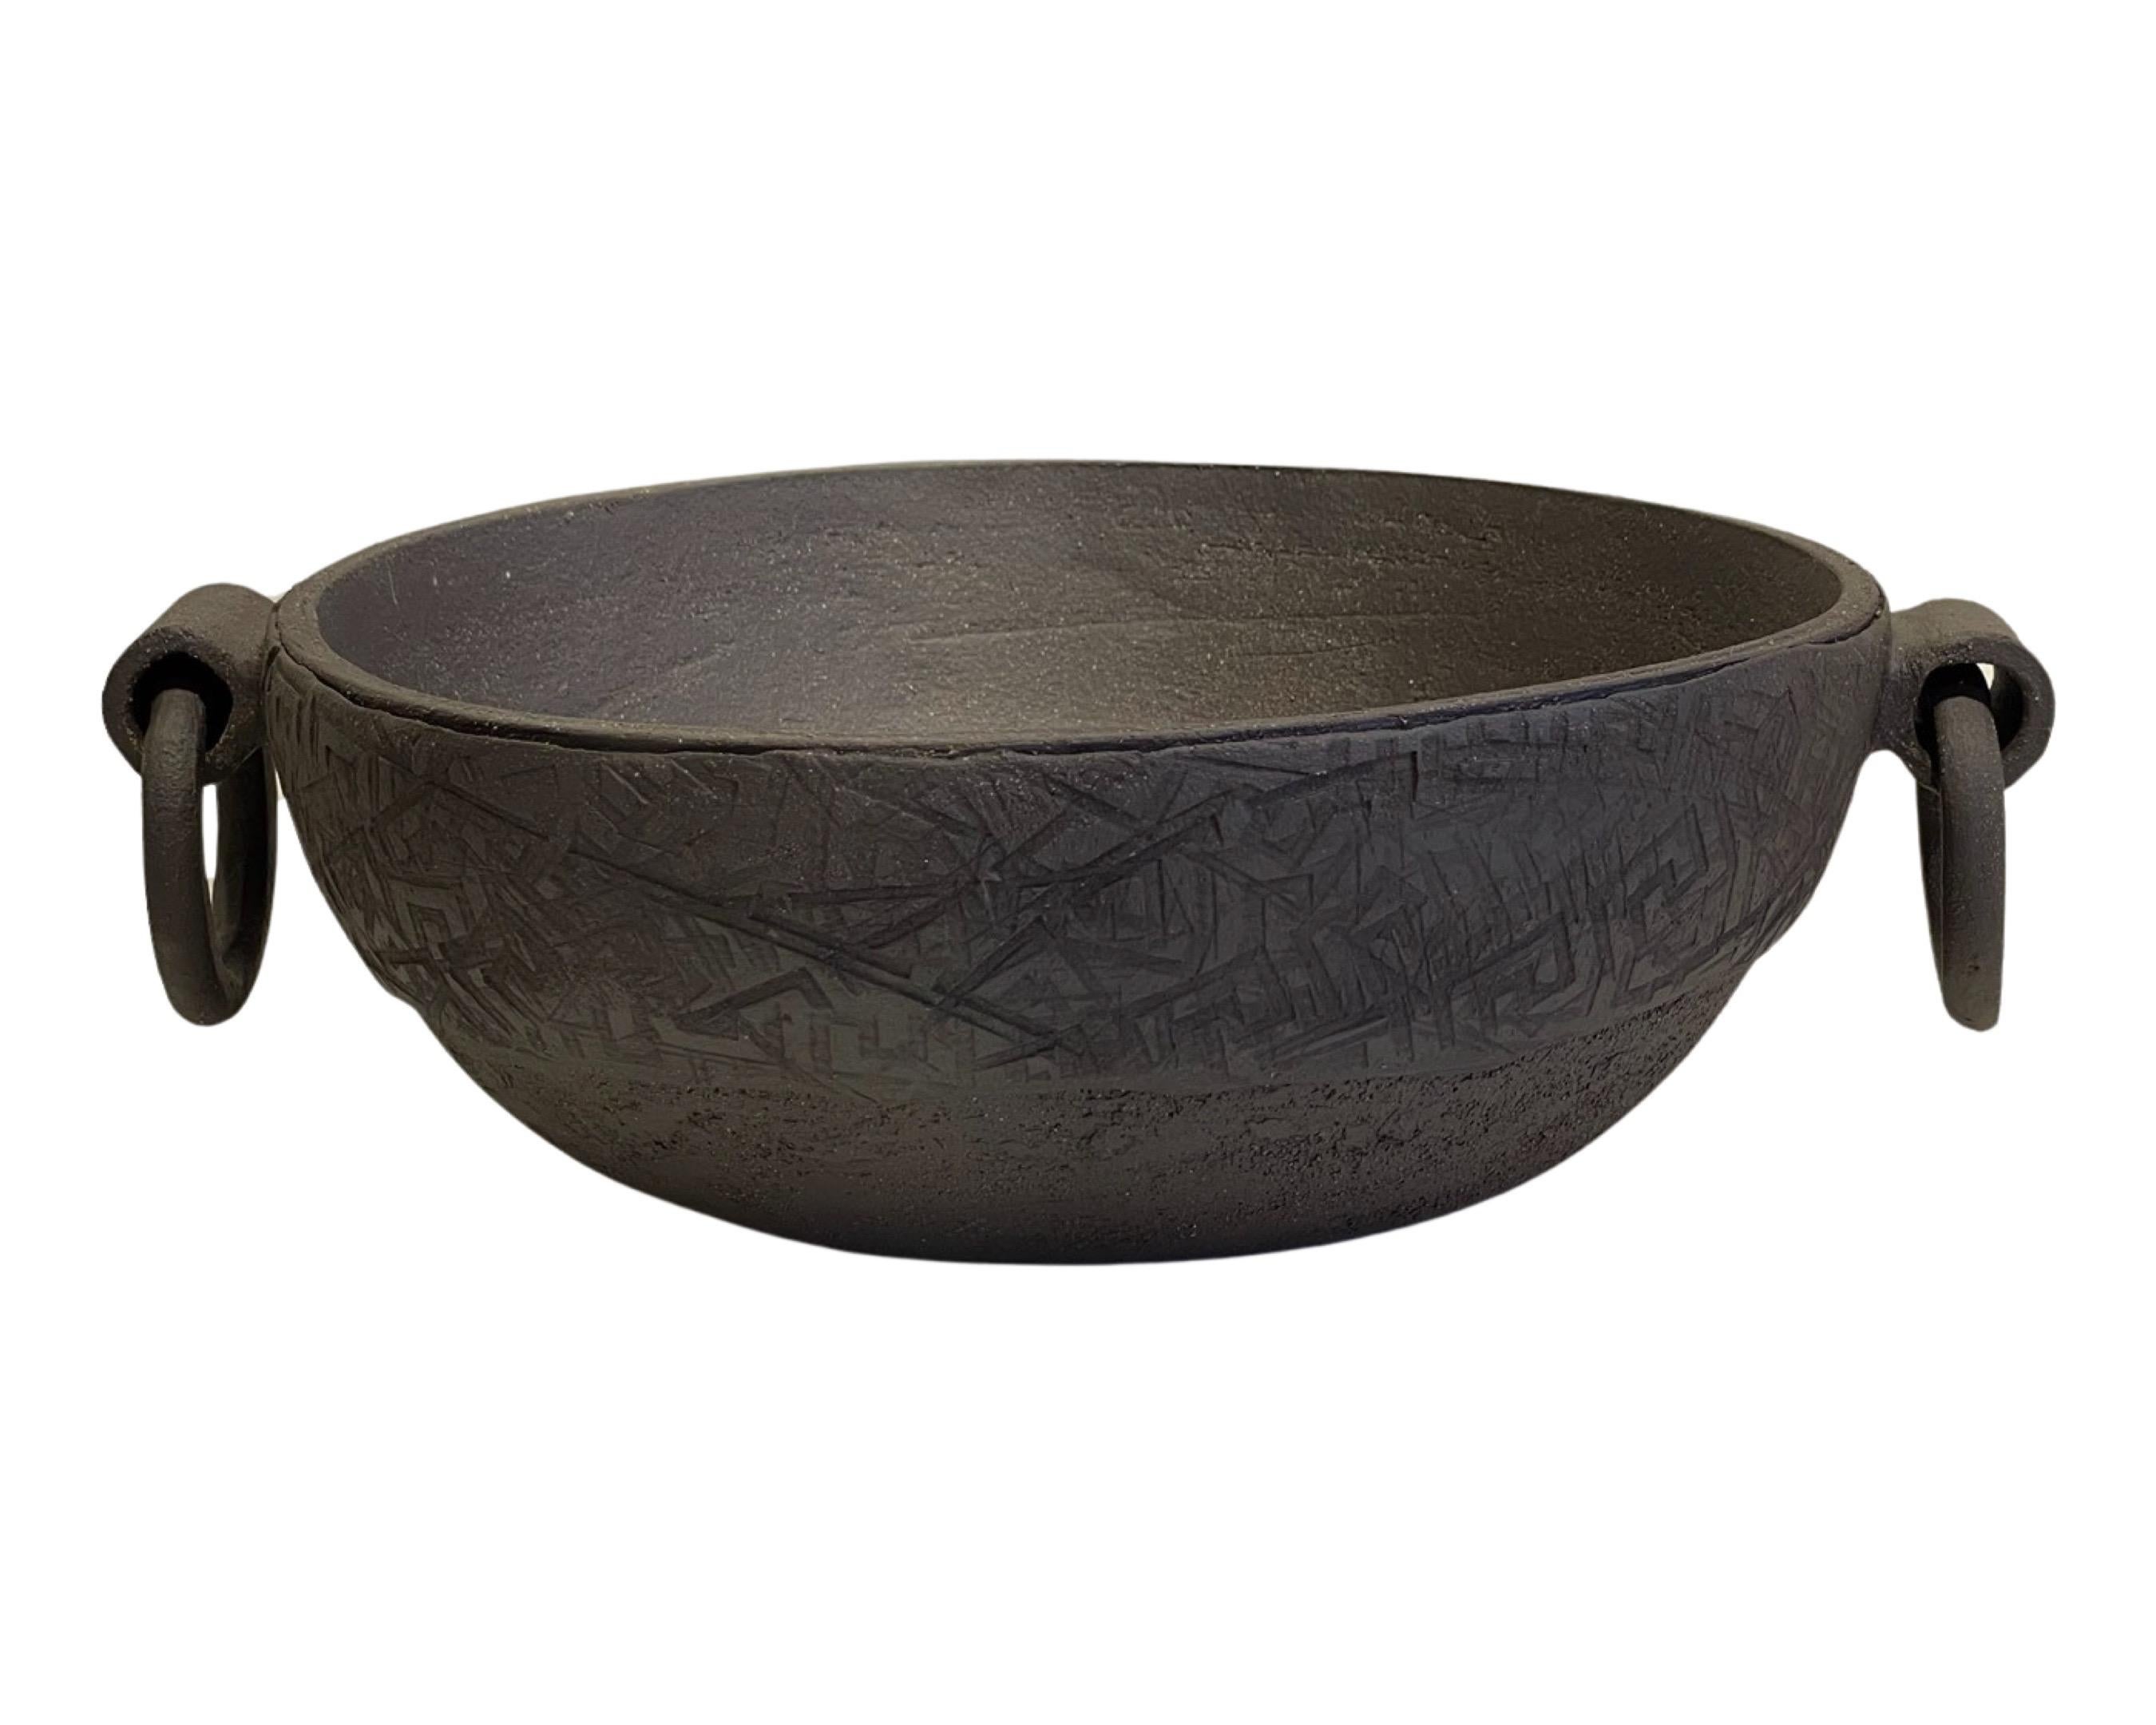 Organic Modern Artisanal Ceramic Centerpiece, Handcrafted Decorative Bowl, Dark Brown For Sale